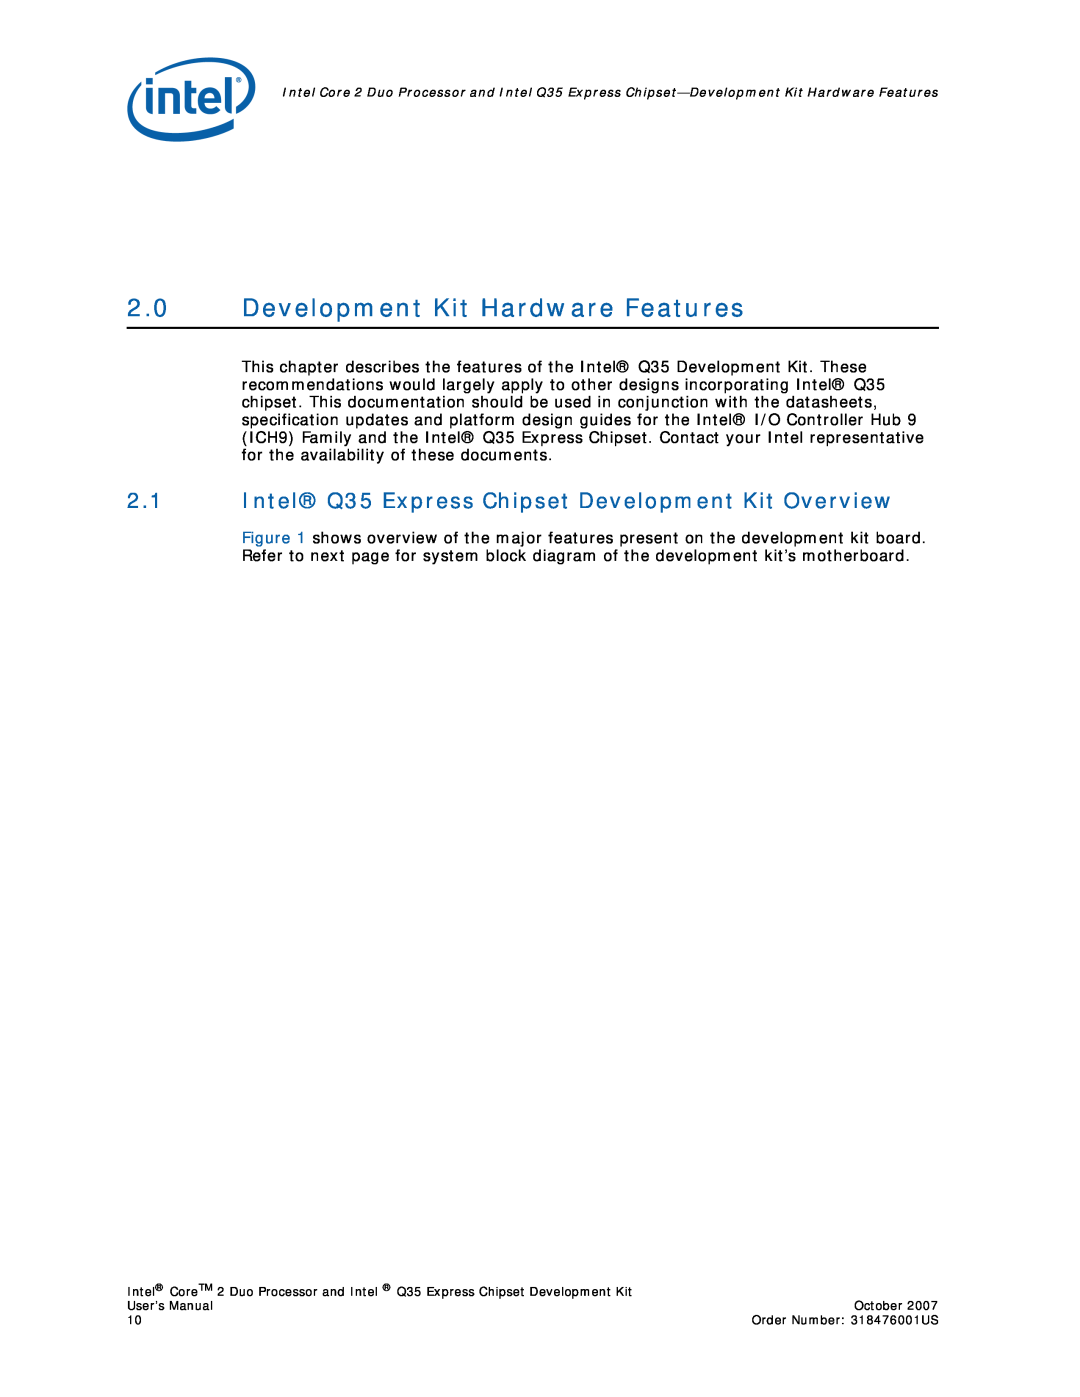 Intel Core 2 Duo user manual Development Kit Hardware Features, Intel Q35 Express Chipset Development Kit Overview 